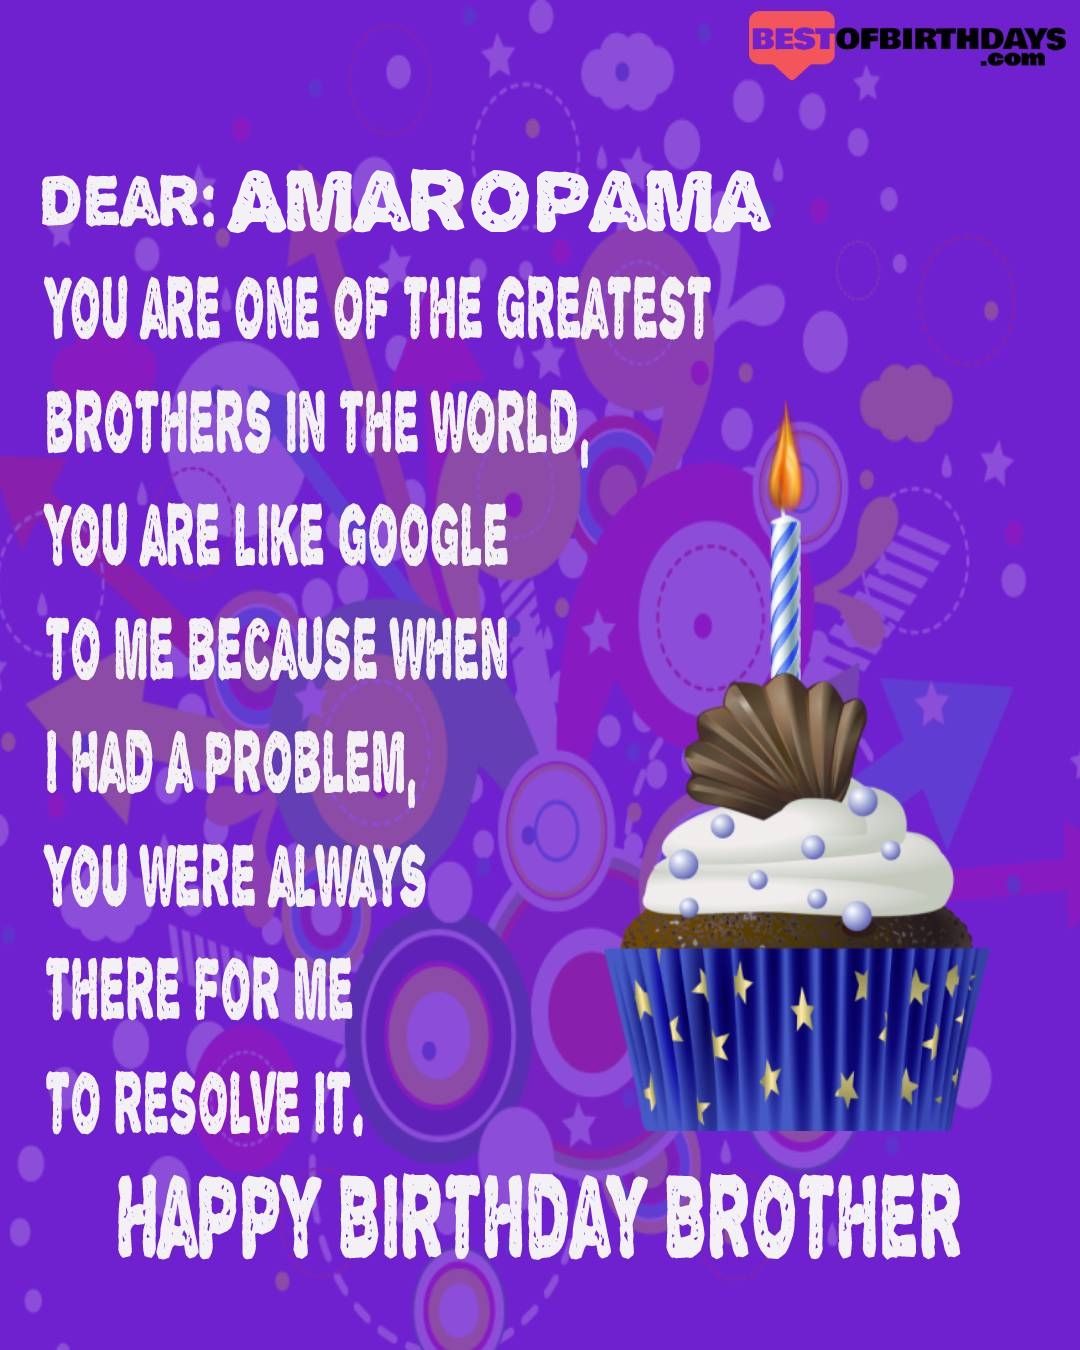 Happy birthday amaropama bhai brother bro